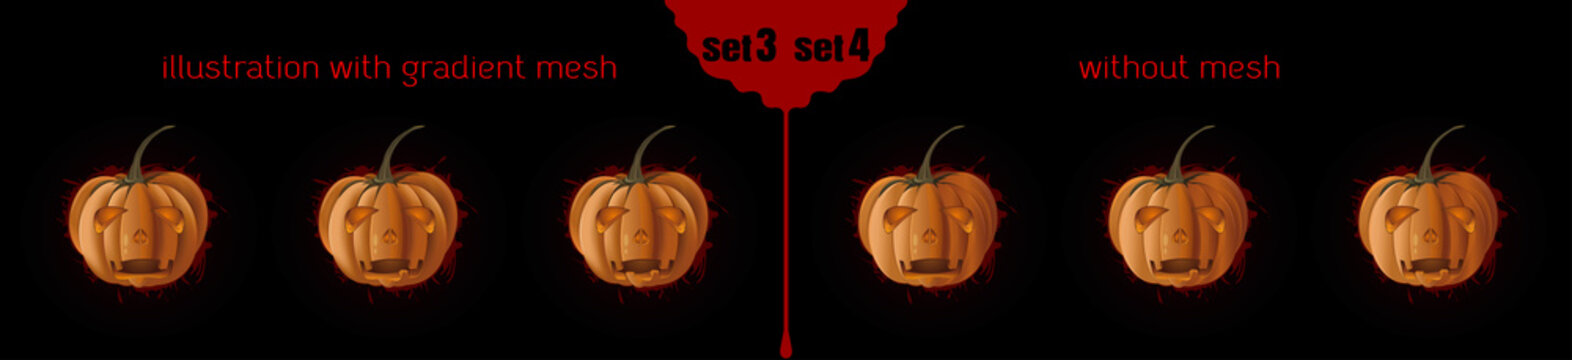 Jack o Lantern (Jack-o'-lantern) icons set 3-4. Halloween design. Pumpkins with different facial expressions. Vector illustration